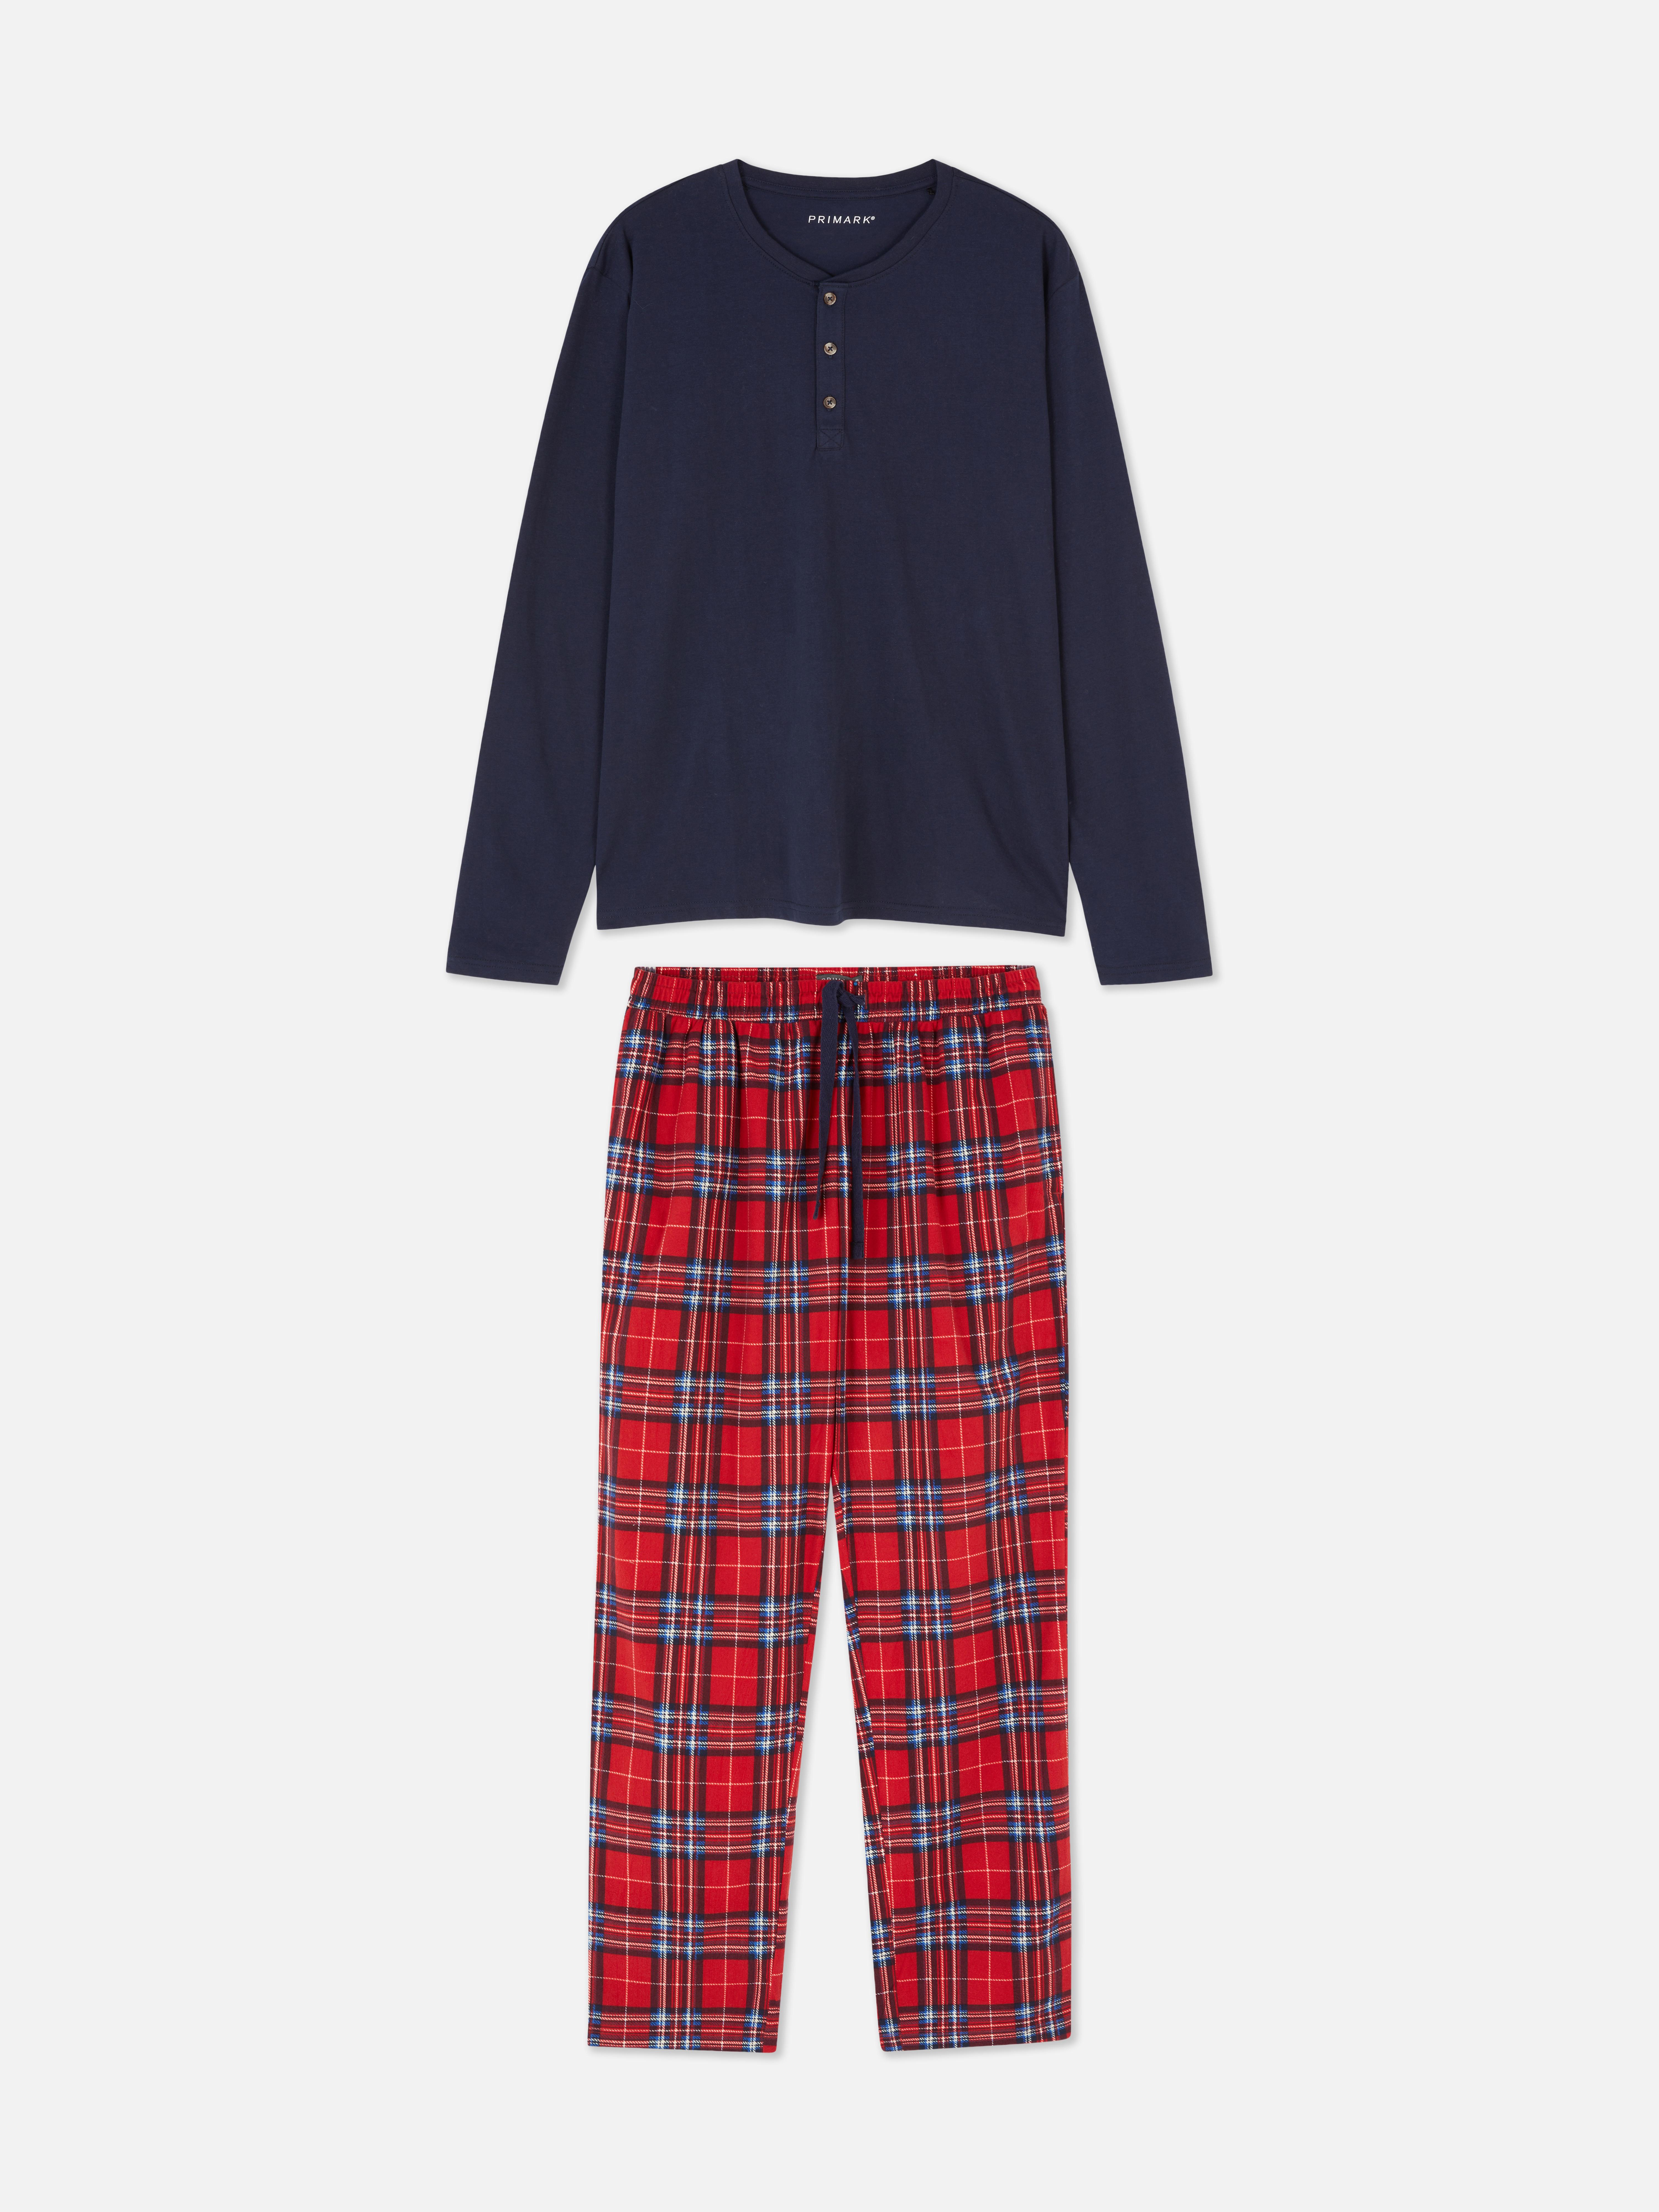 Supersoft Jersey Pajamas